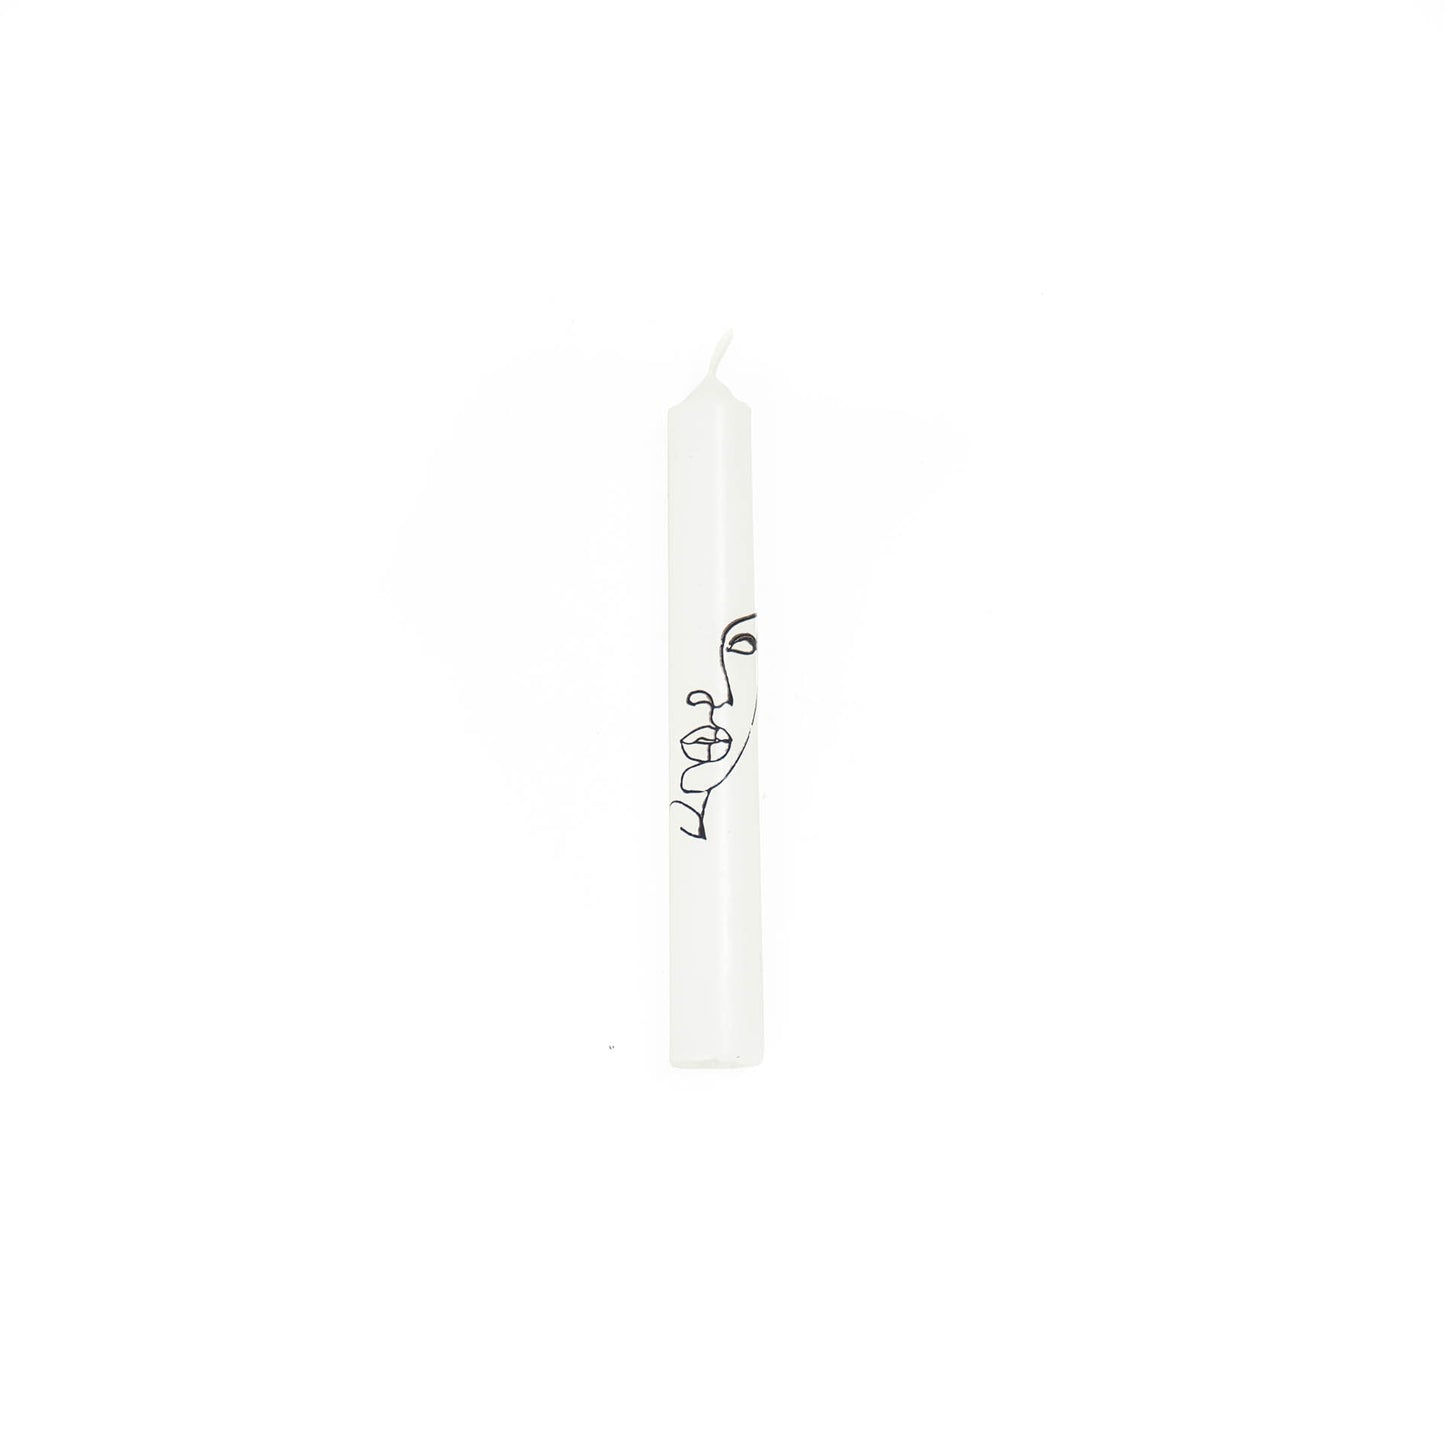 HV 6 Candles - White - Face - 2,3x14cm